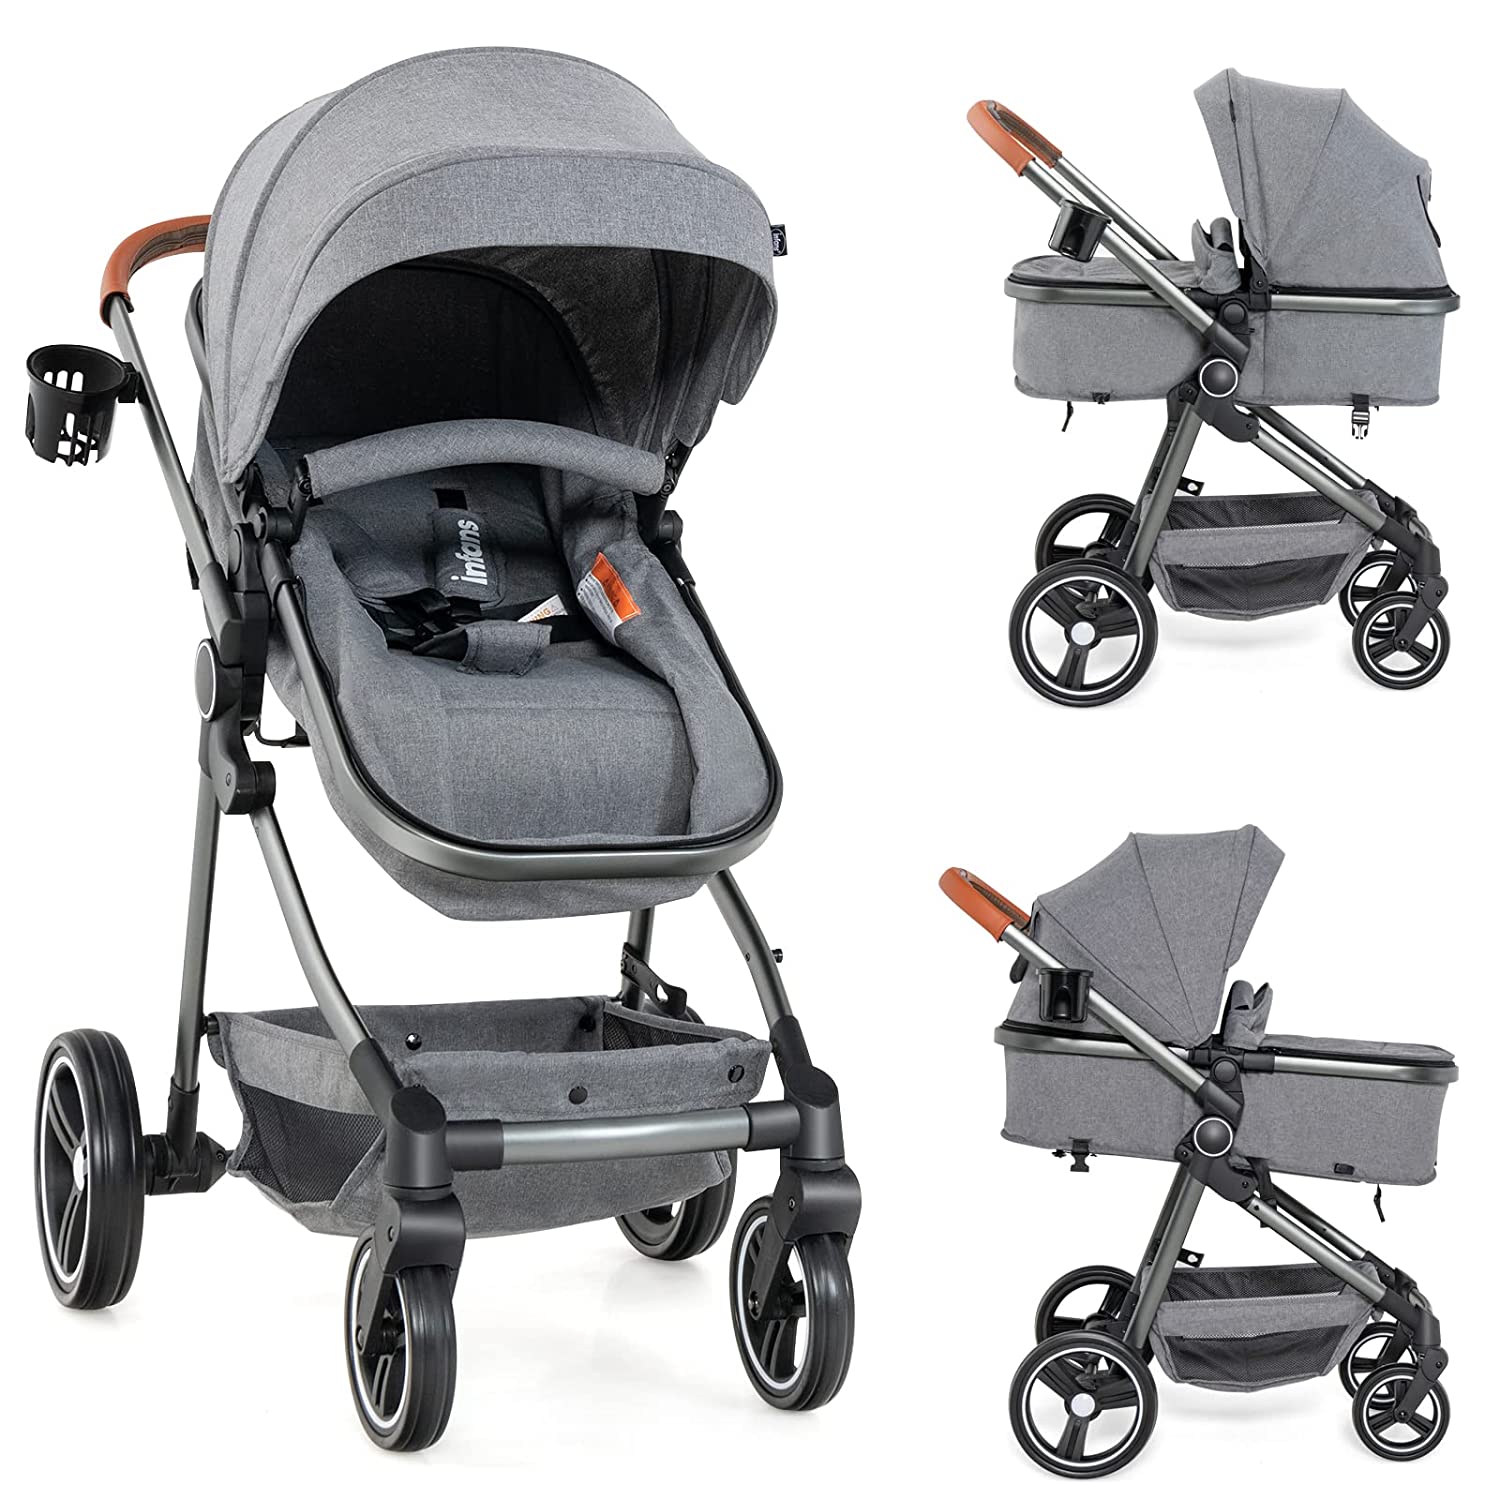 INFANS 2 in 1 High Landscape Convertible Baby Stroller, Newborn Revers